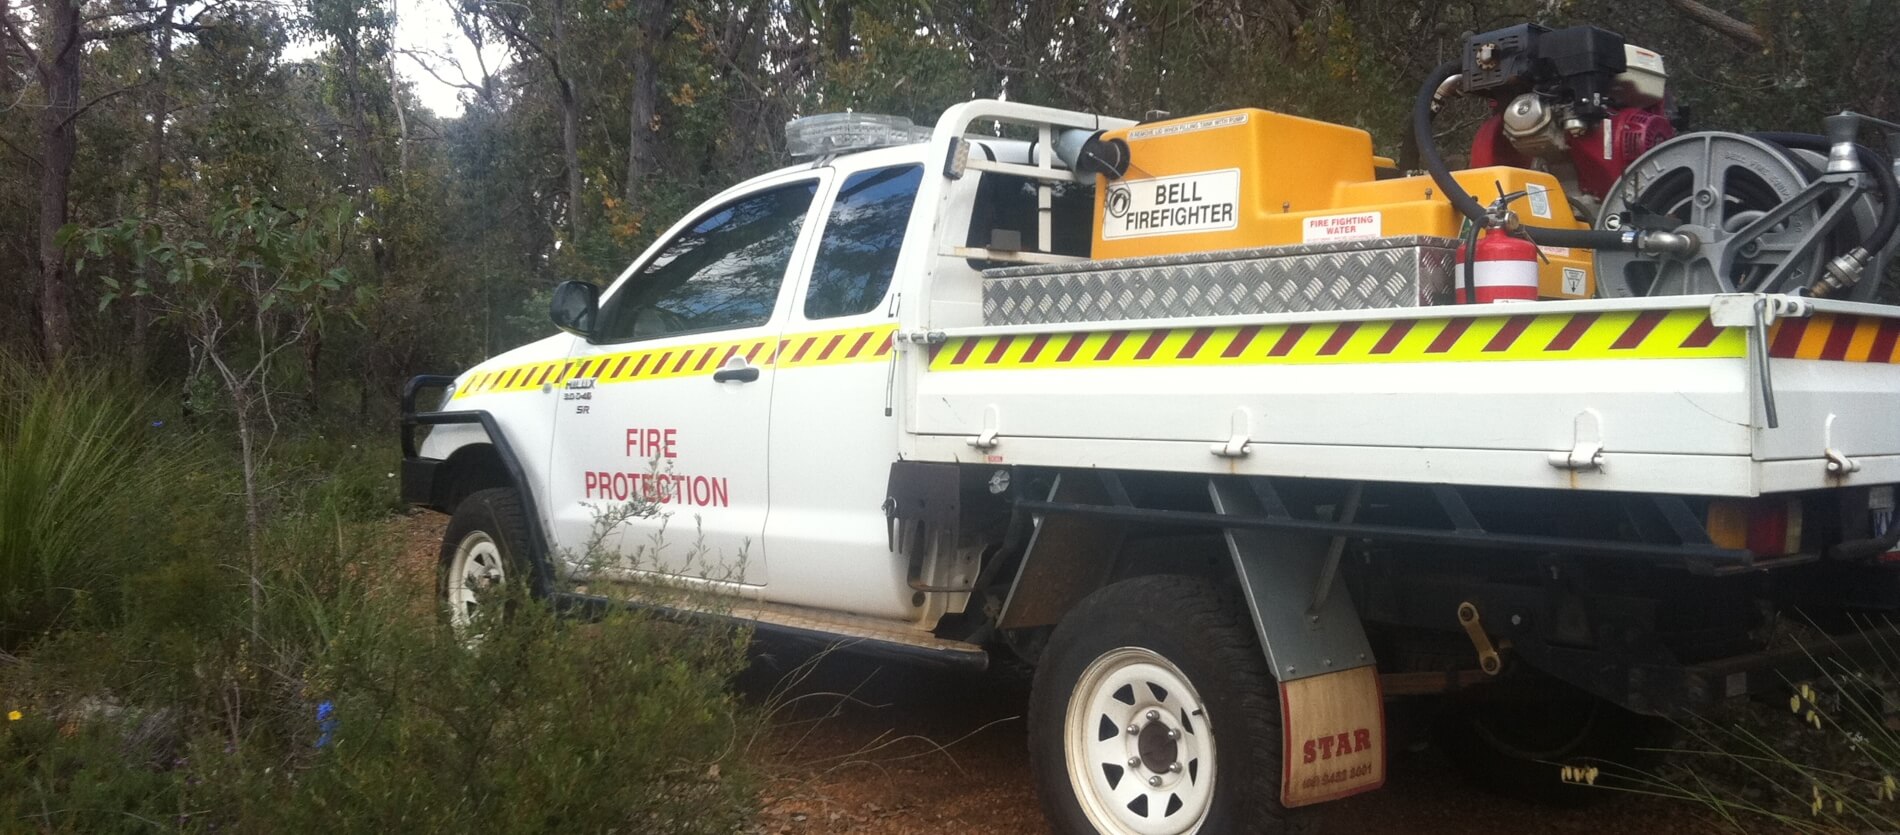 Fire Protection Vehicle accessing bushland via a fire break area